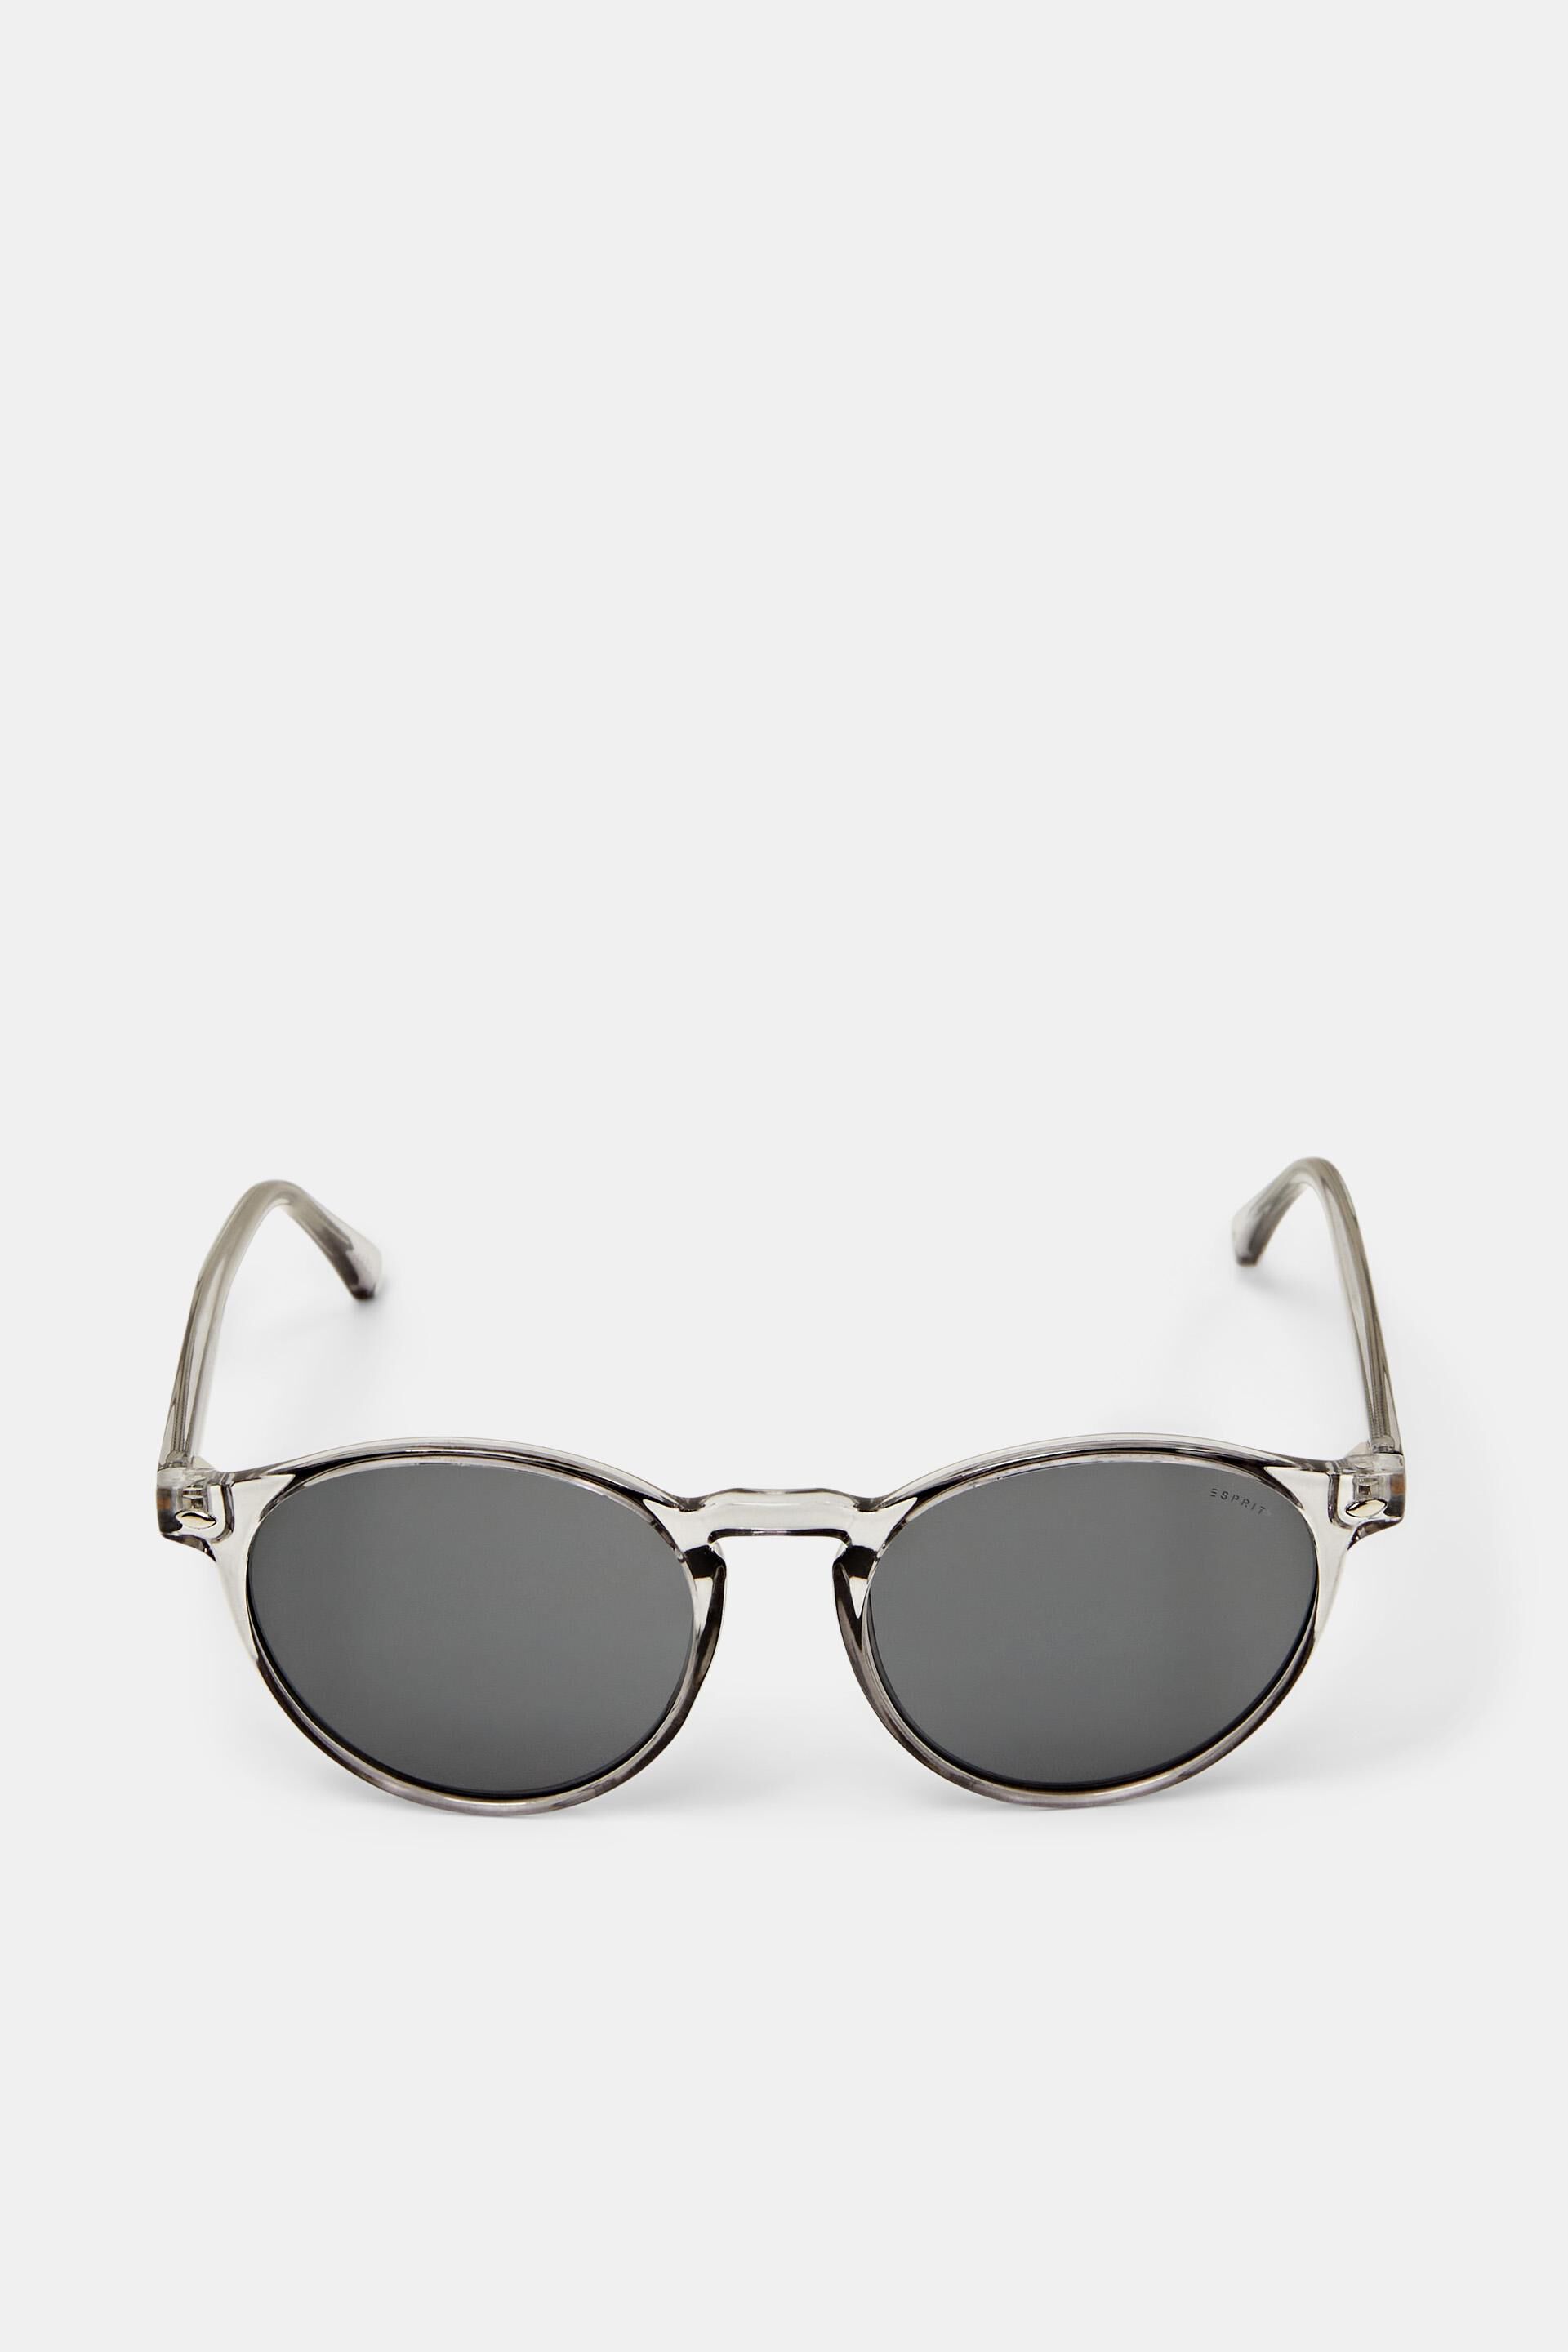 Esprit transparent Sunglasses round frame with